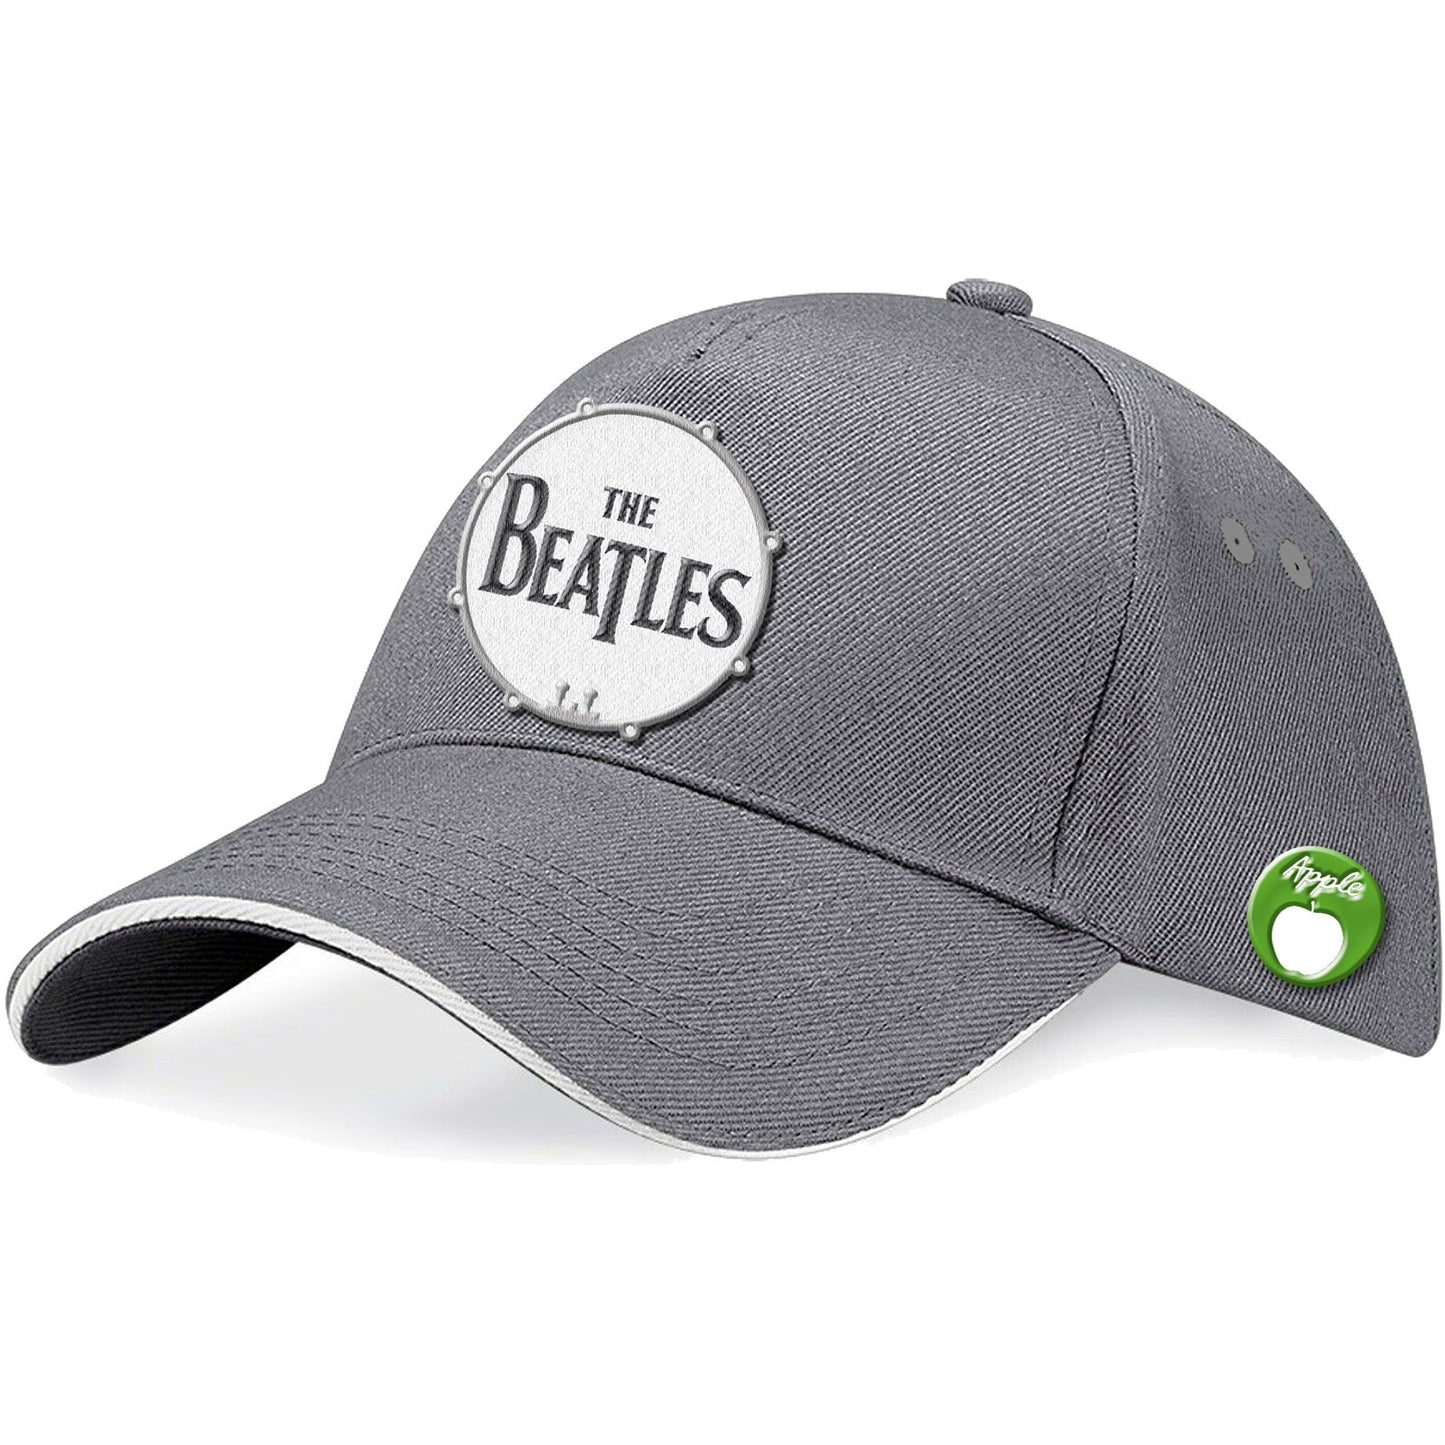 The Beatles Baseball Cap: Drum